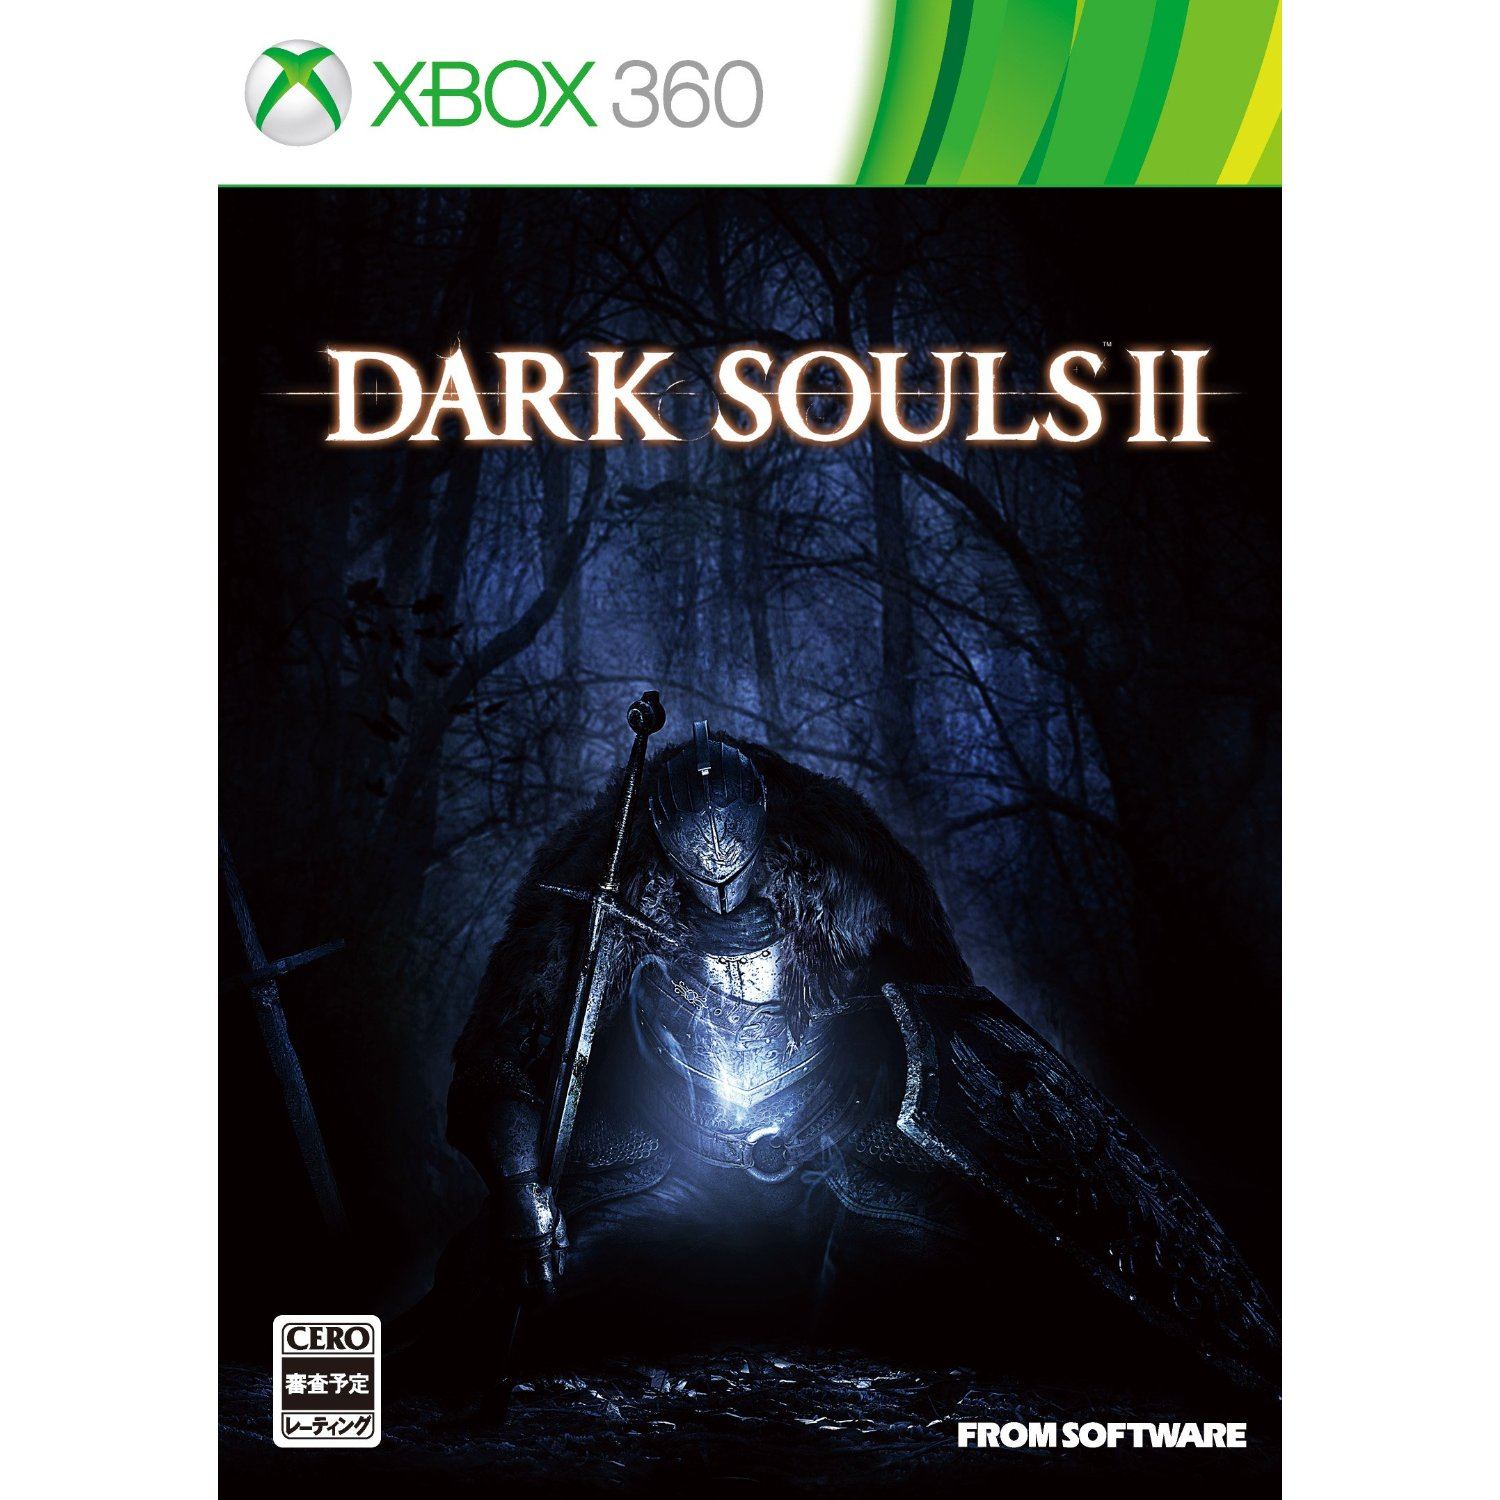  Dark Souls (Xbox 360)